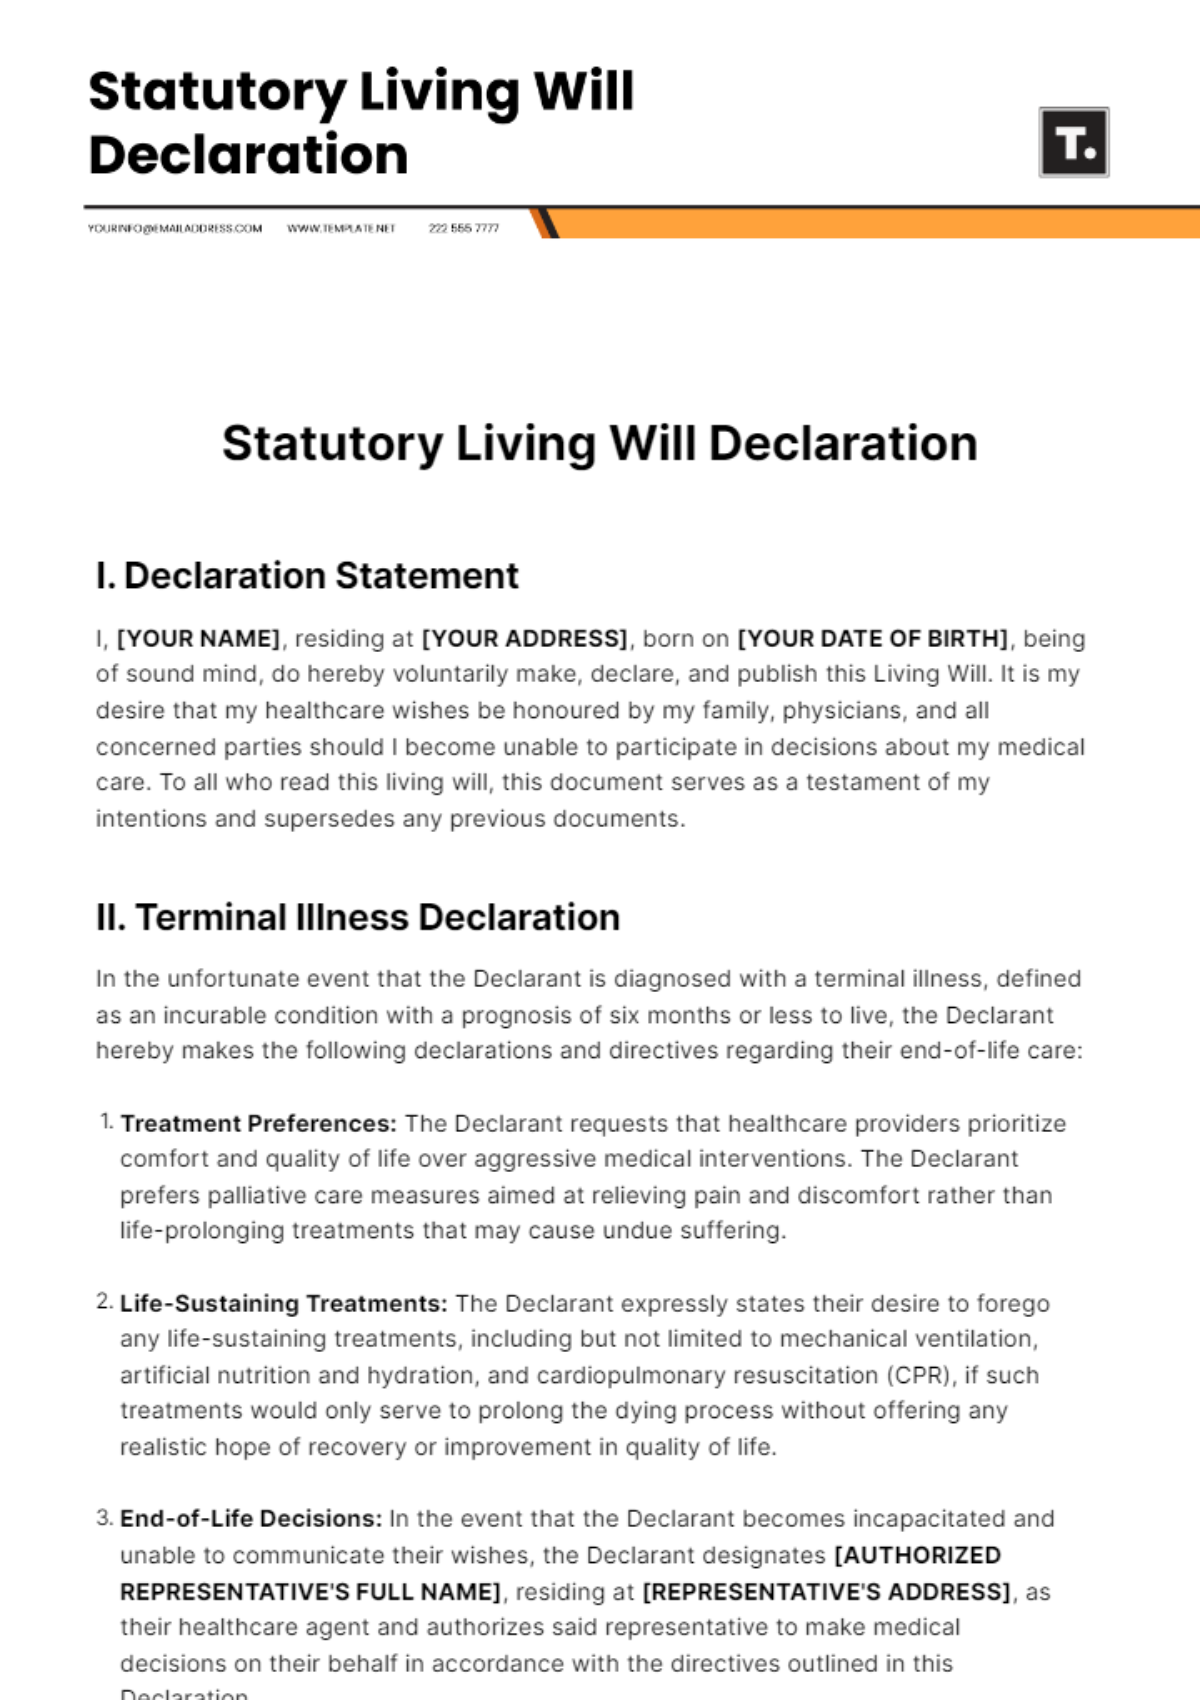 Statutory Living Will Declaration Template